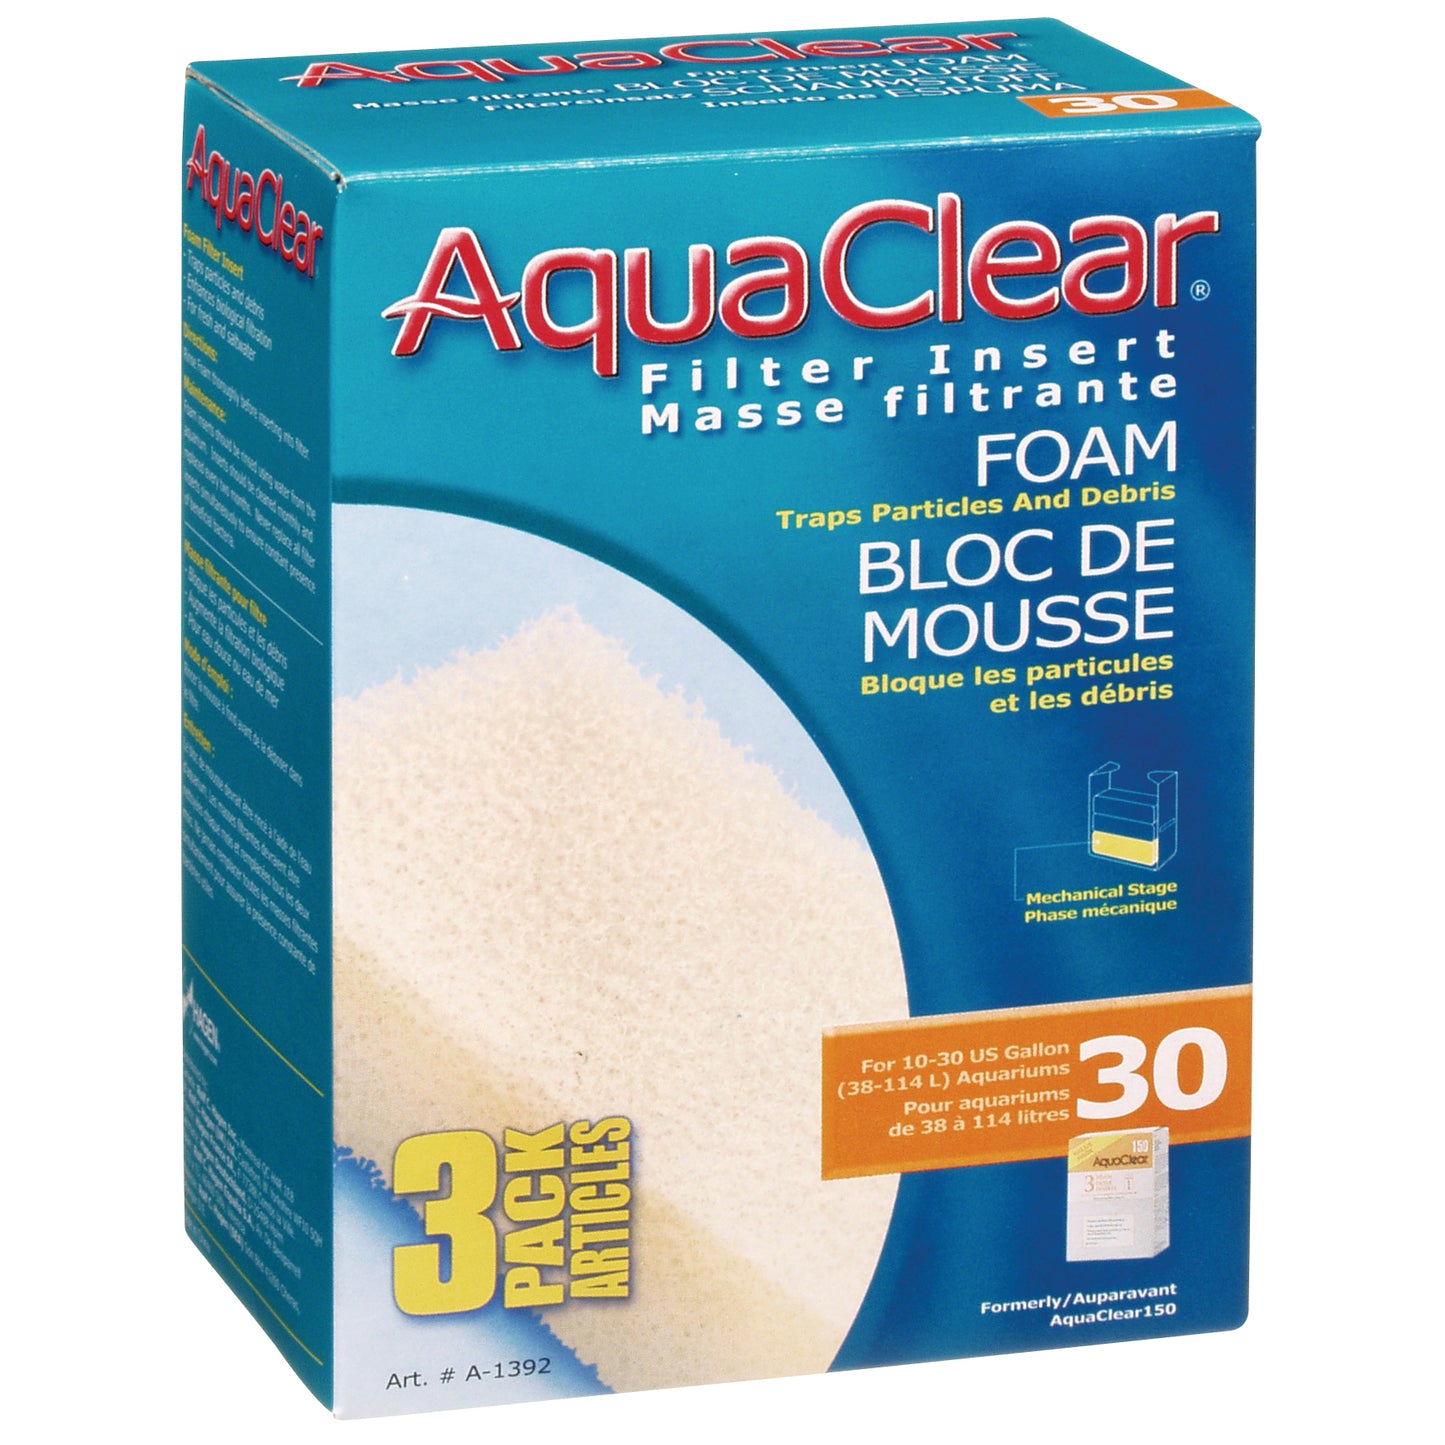 AquaClear 30 Foam Filter Insert, 3-Pack